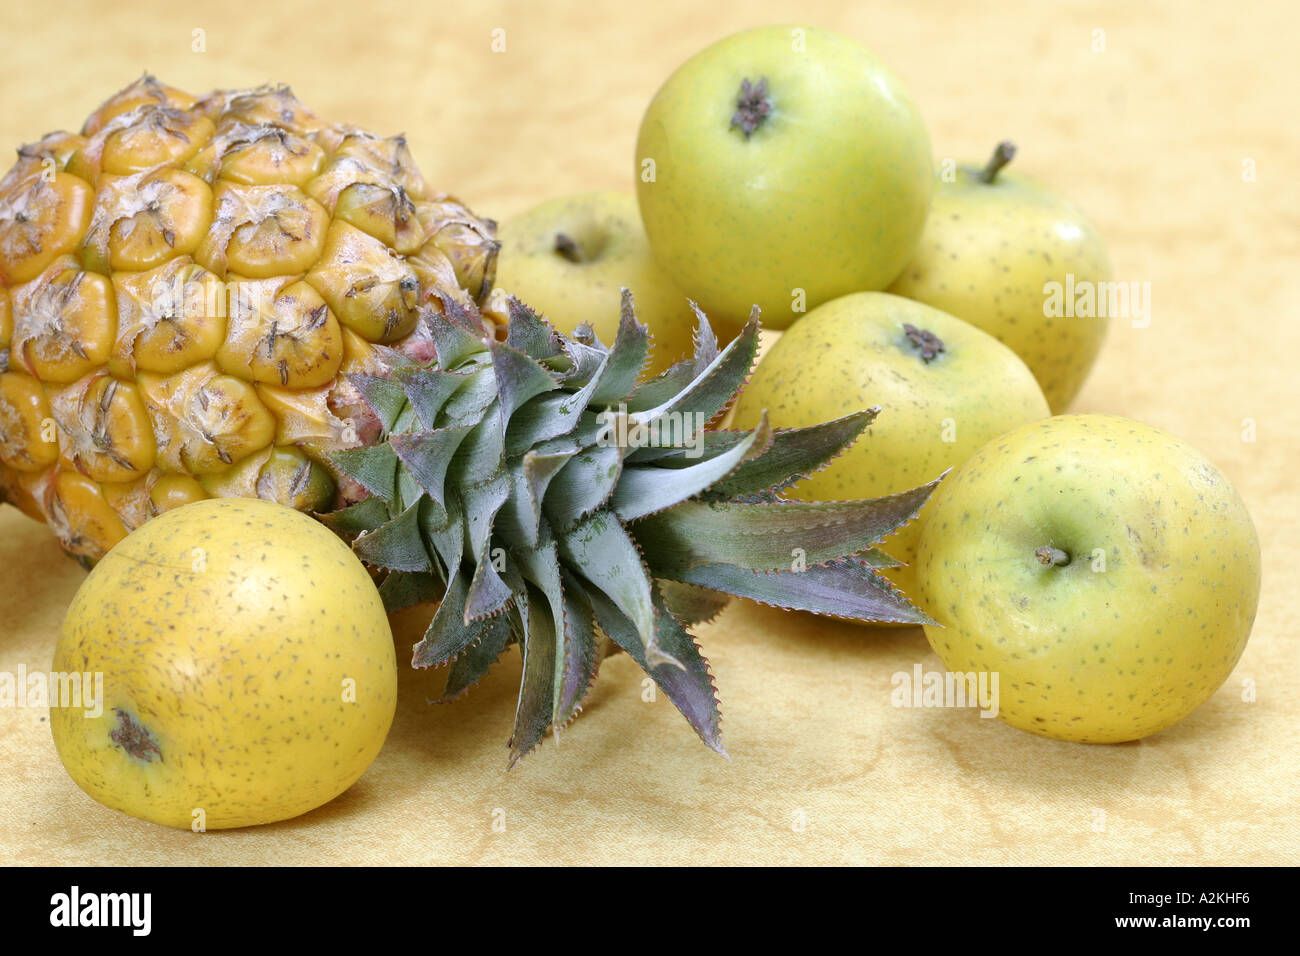 Apple sort Ananasrenette with pineapple Stock Photo